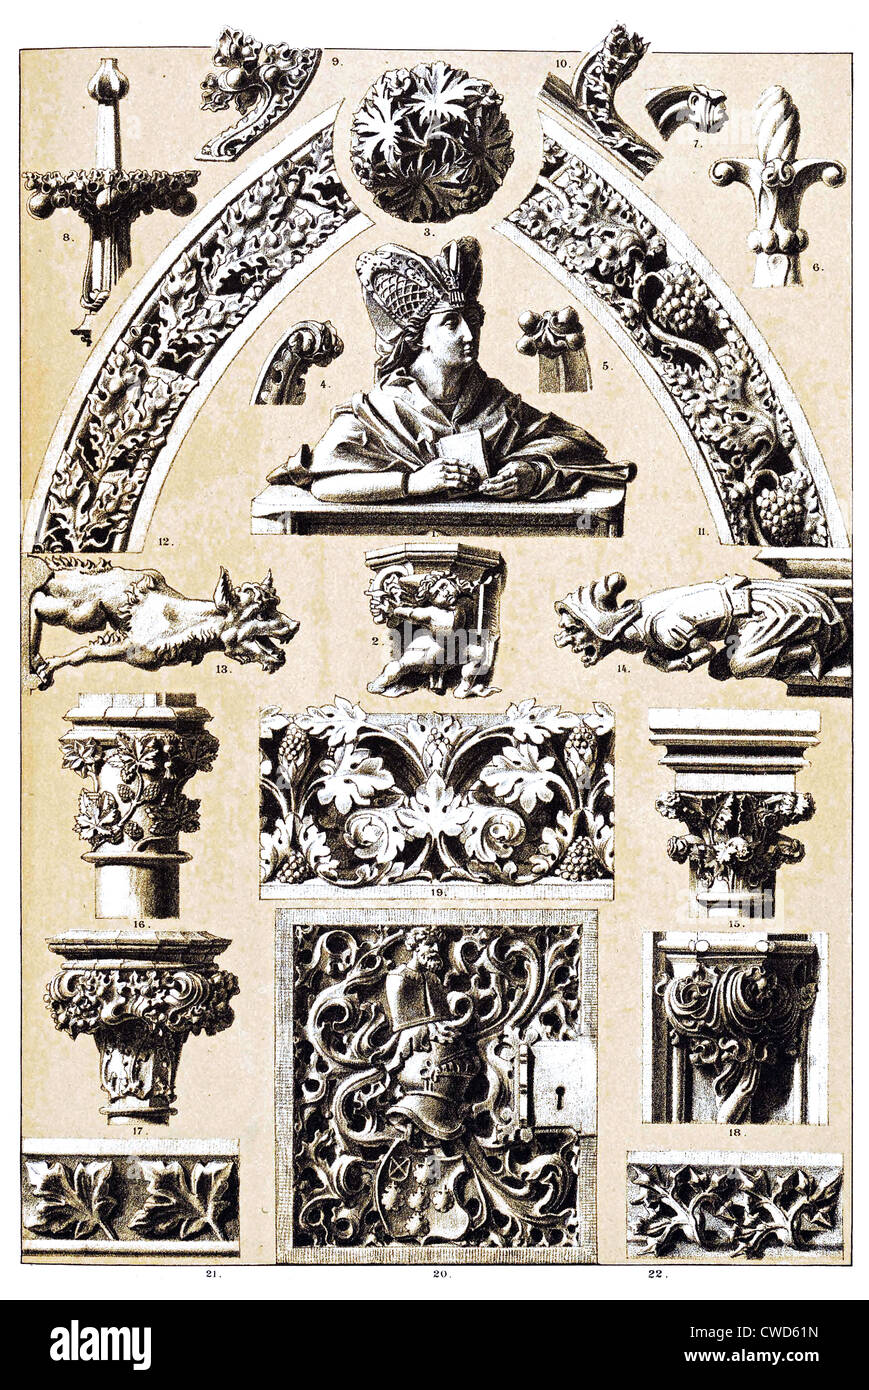 Gothic architecture sculpture and ornamentation Stock Photo